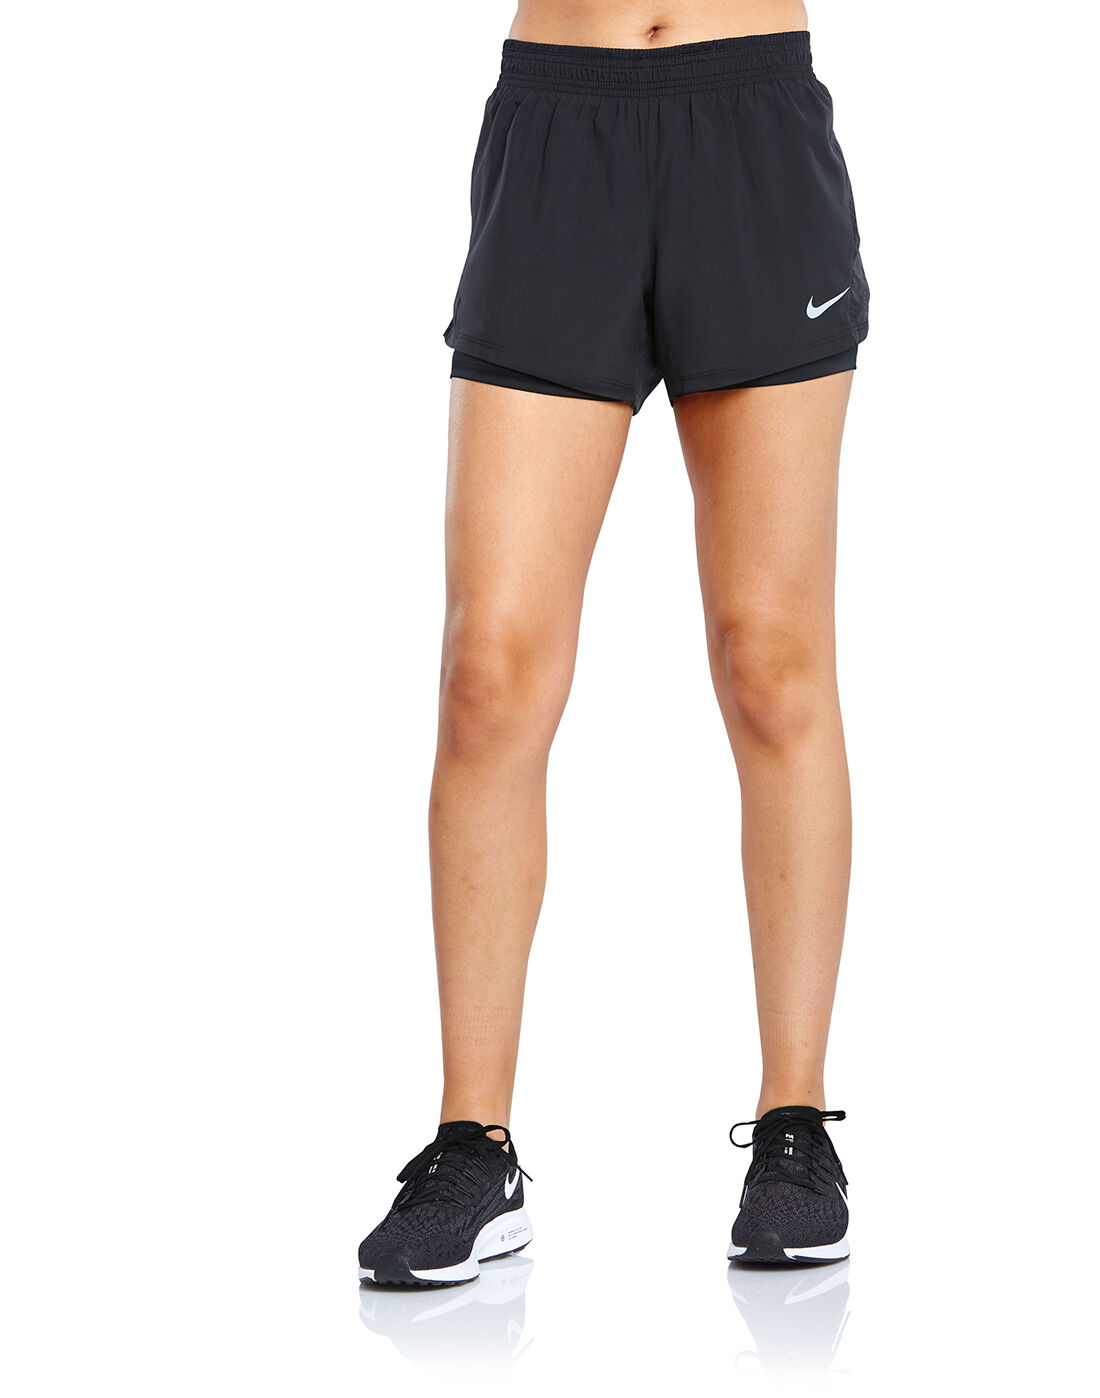 Nike Womens 10K 2 In 1 Short - Black | Life Style Sports EU